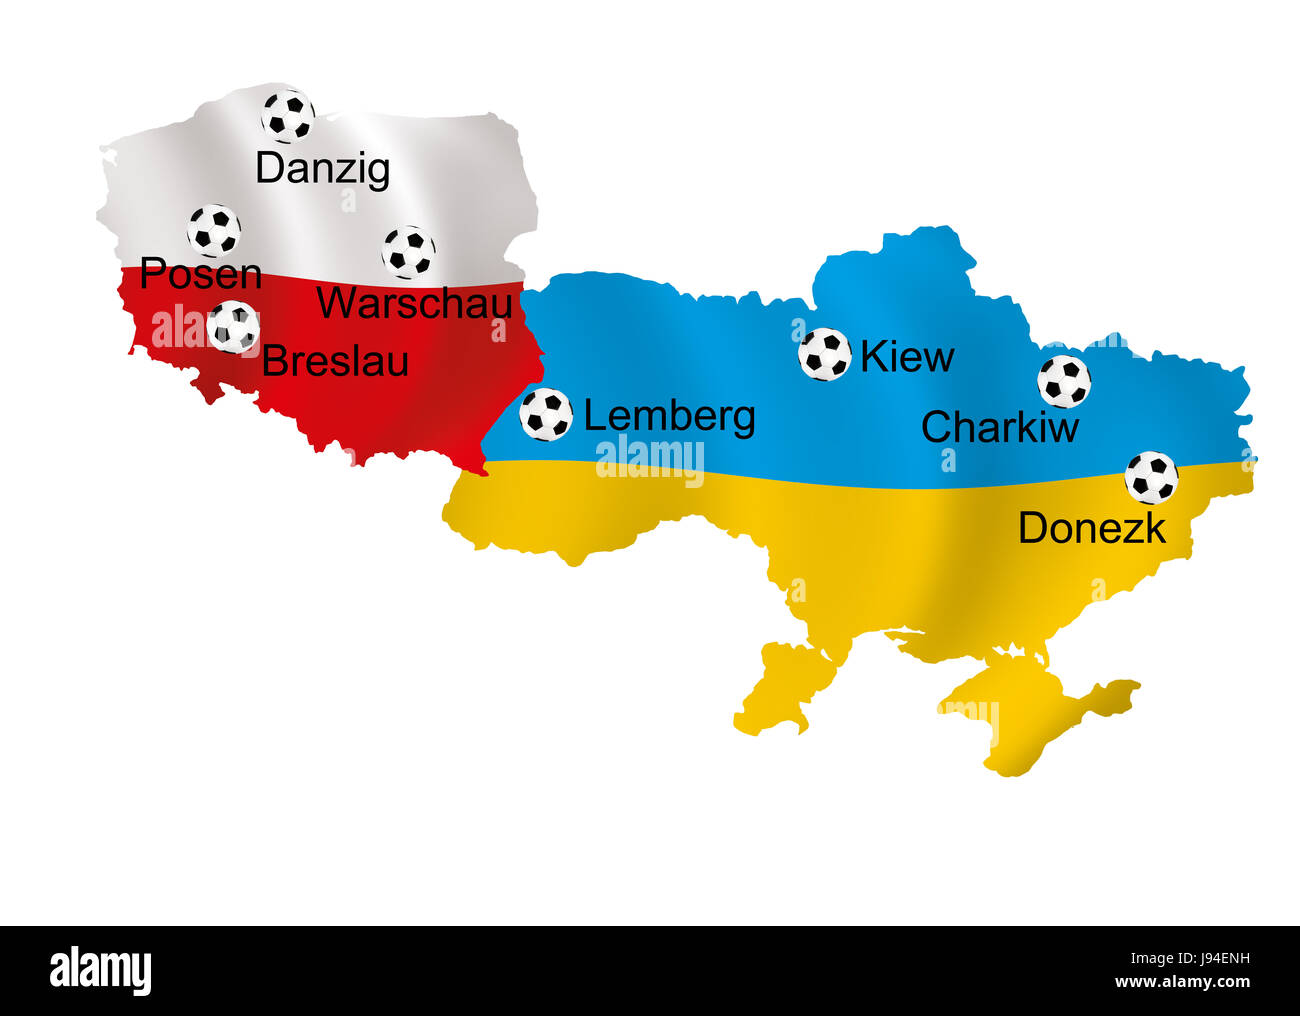 poland, ukraine, sport, sports, soccer, football, detail, city, town, isolated, Stock Photo